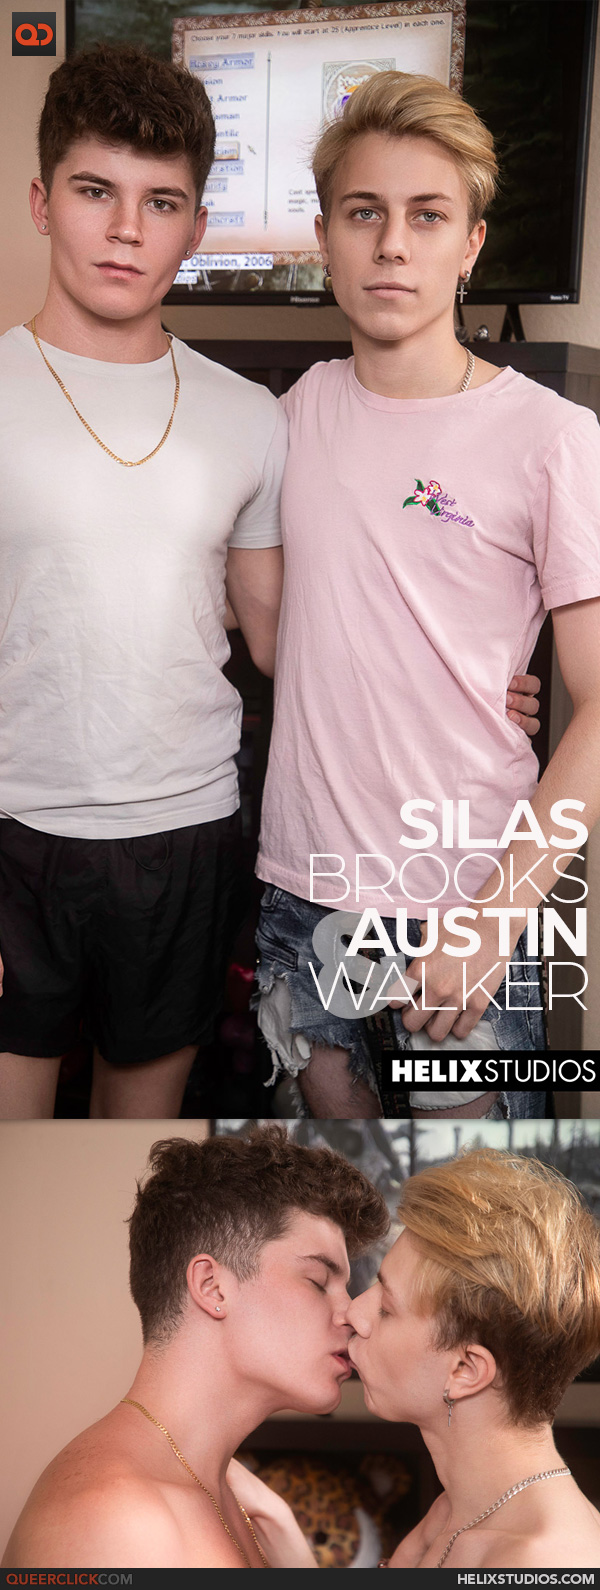 Helix Studios: Silas Brooks and Austin Walker